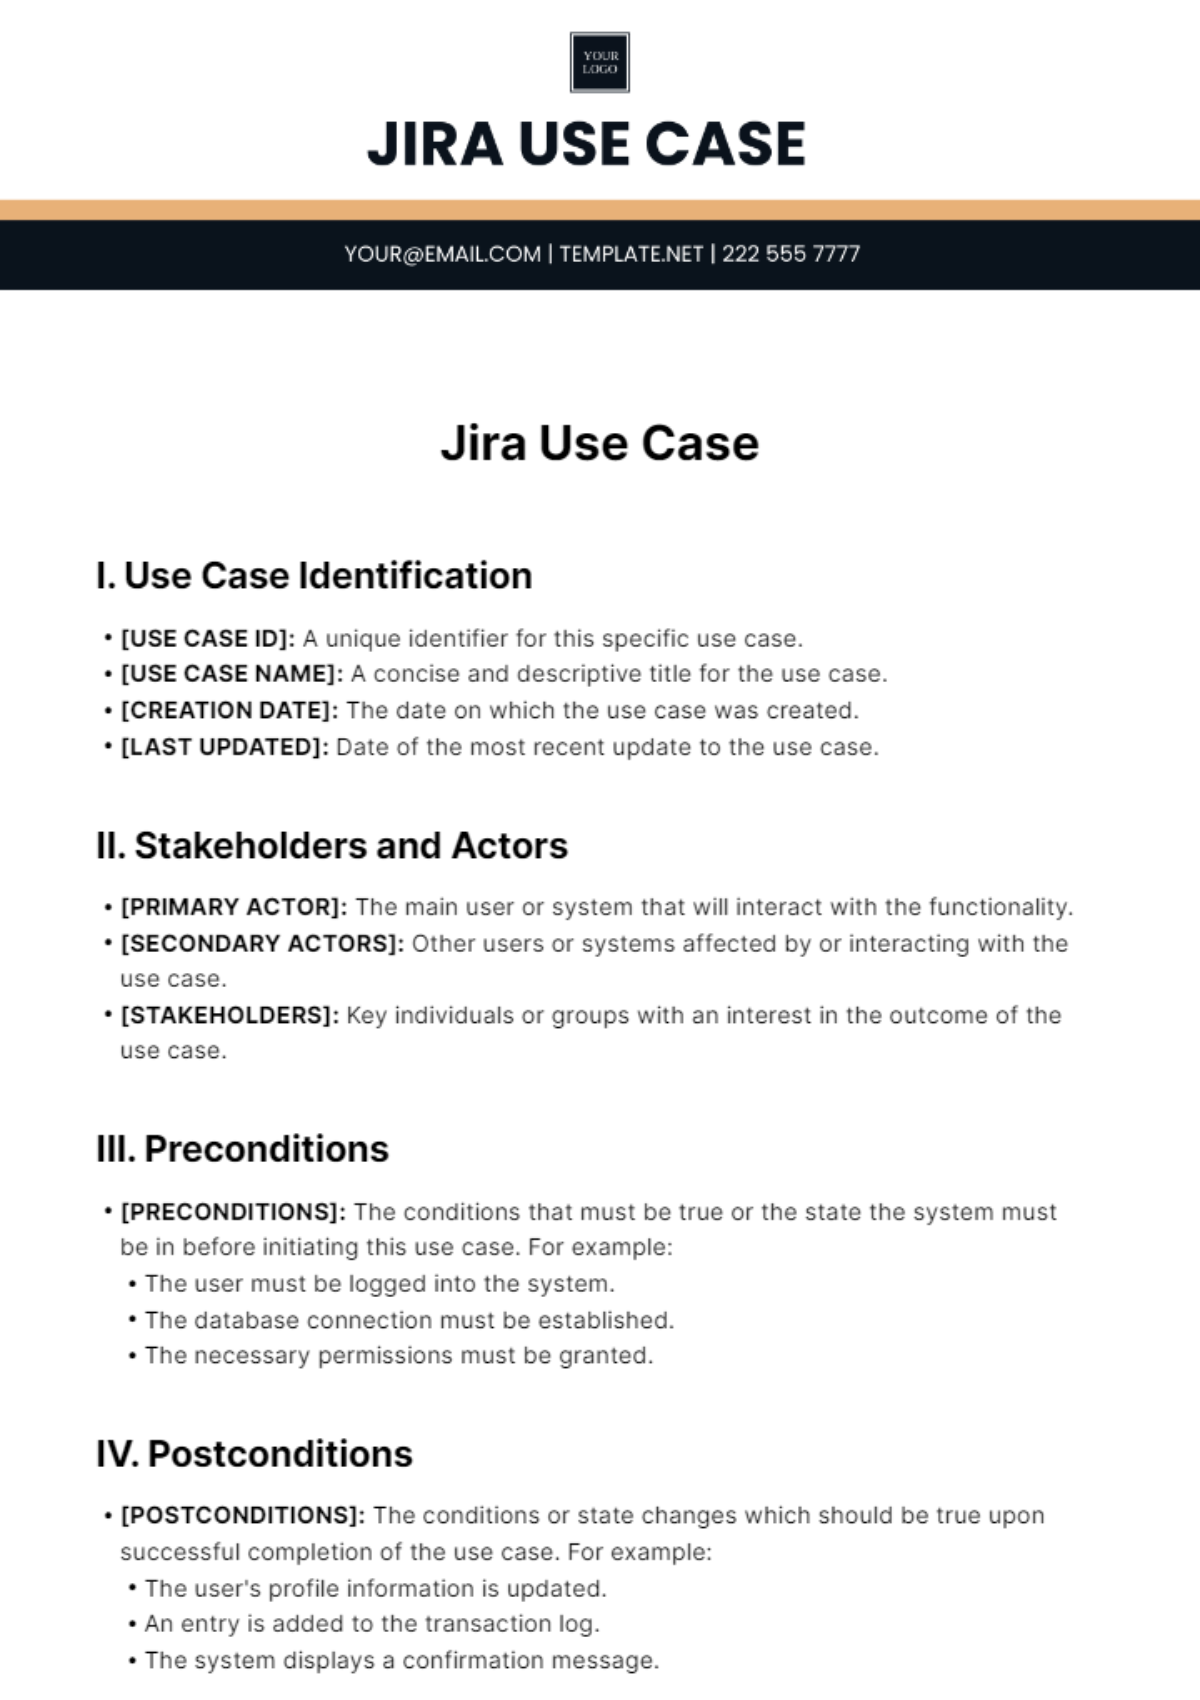 Jira Use Case Template